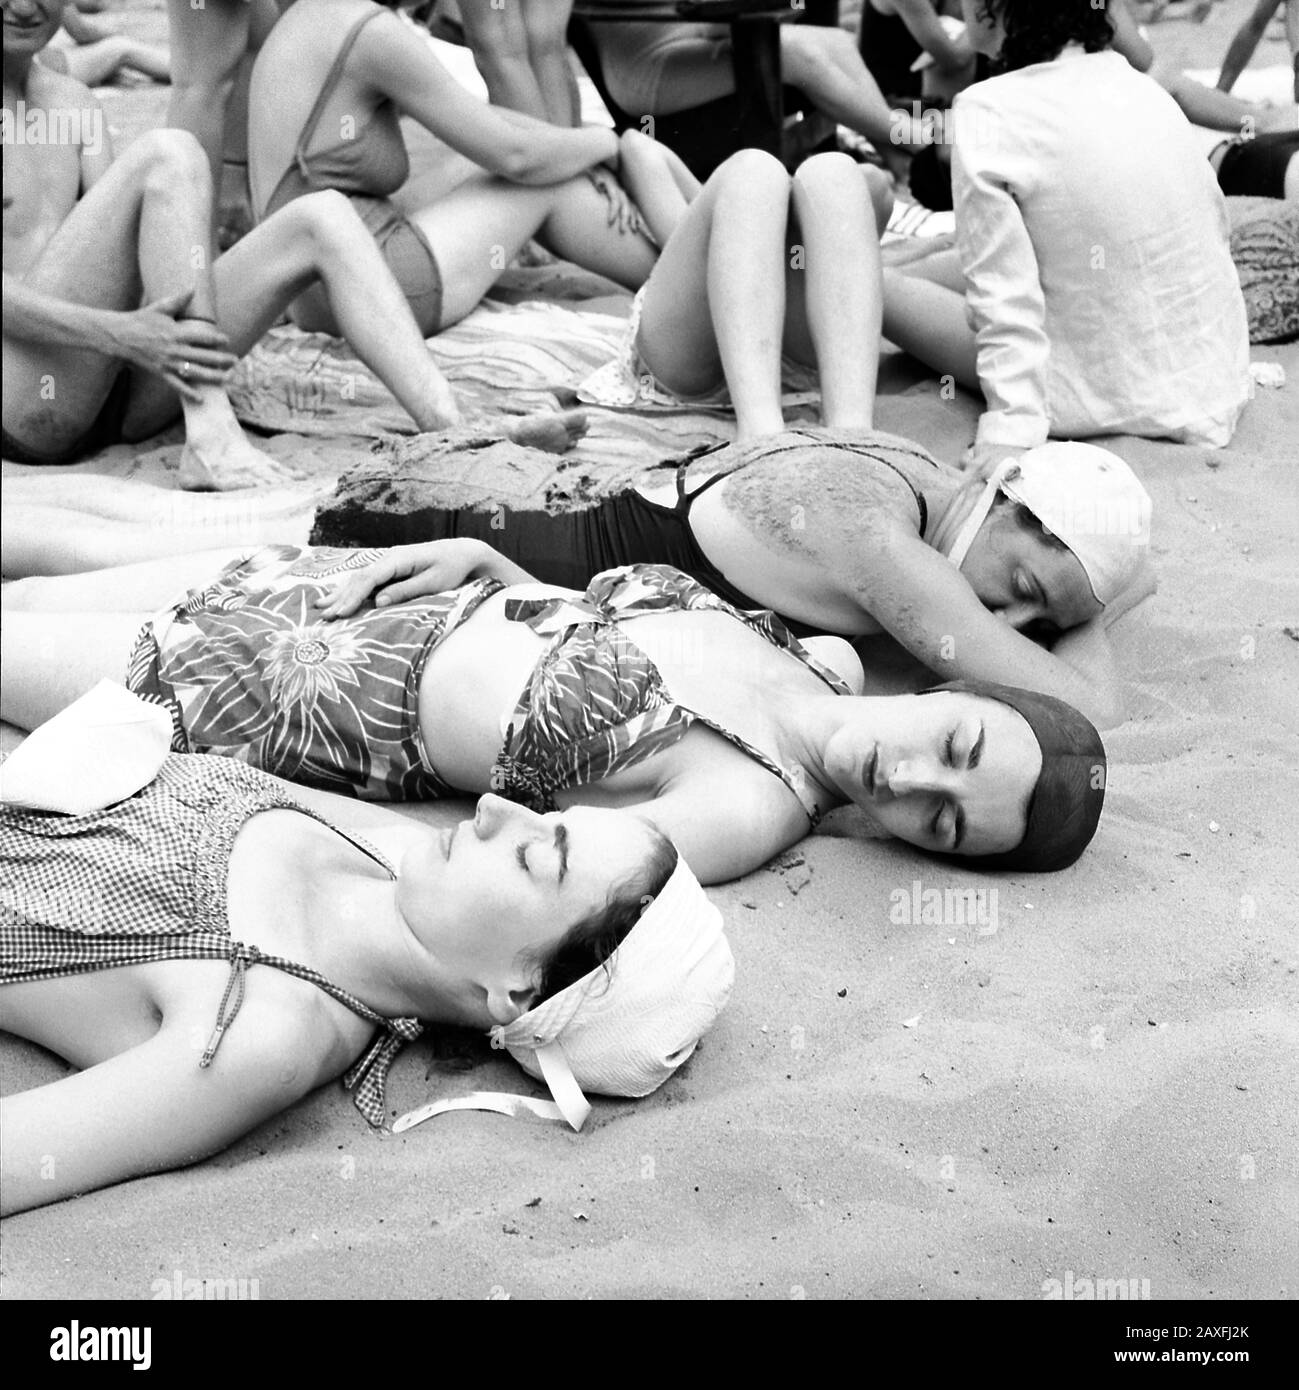 1943 , july , Glen Echo ,  Maryland , USA : Sun bathers on the sand beach at the swimming pool in the Glen Echo amusement park .  Photo by woman photographer Esther Bubley - UNITED STATES  - FOTO STORICHE - HISTORY - GEOGRAFIA - GEOGRAPHY  - ANNI QUARANTA - 1940's - 40's - '40 - STOCK - DONNA - DONNE in COSTUME DA BAGNO - SWIMSUIT - sabbia - sand - spiaggia - beach - mare - sea - VACANZA - VACANZE - HOLIDAYS - sleeping beauties beauty - bellezza - bellezze al bagno - cuffia di plastica - SONNO - SOGNO - DREAM - DONNE addormentate - women - donna - woman - BAGNANTI - due pezzi - bikini - seni - Stock Photo